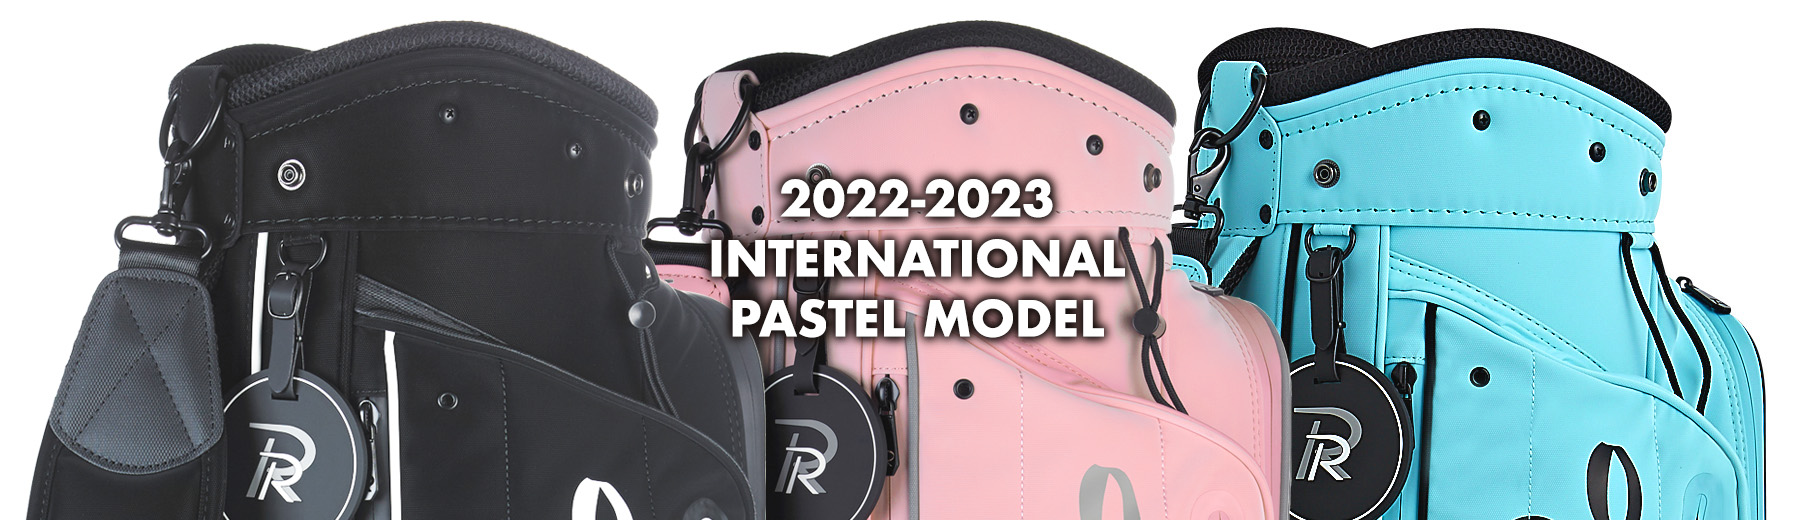 2022 INTERNATIONAL PASTEL MODEL